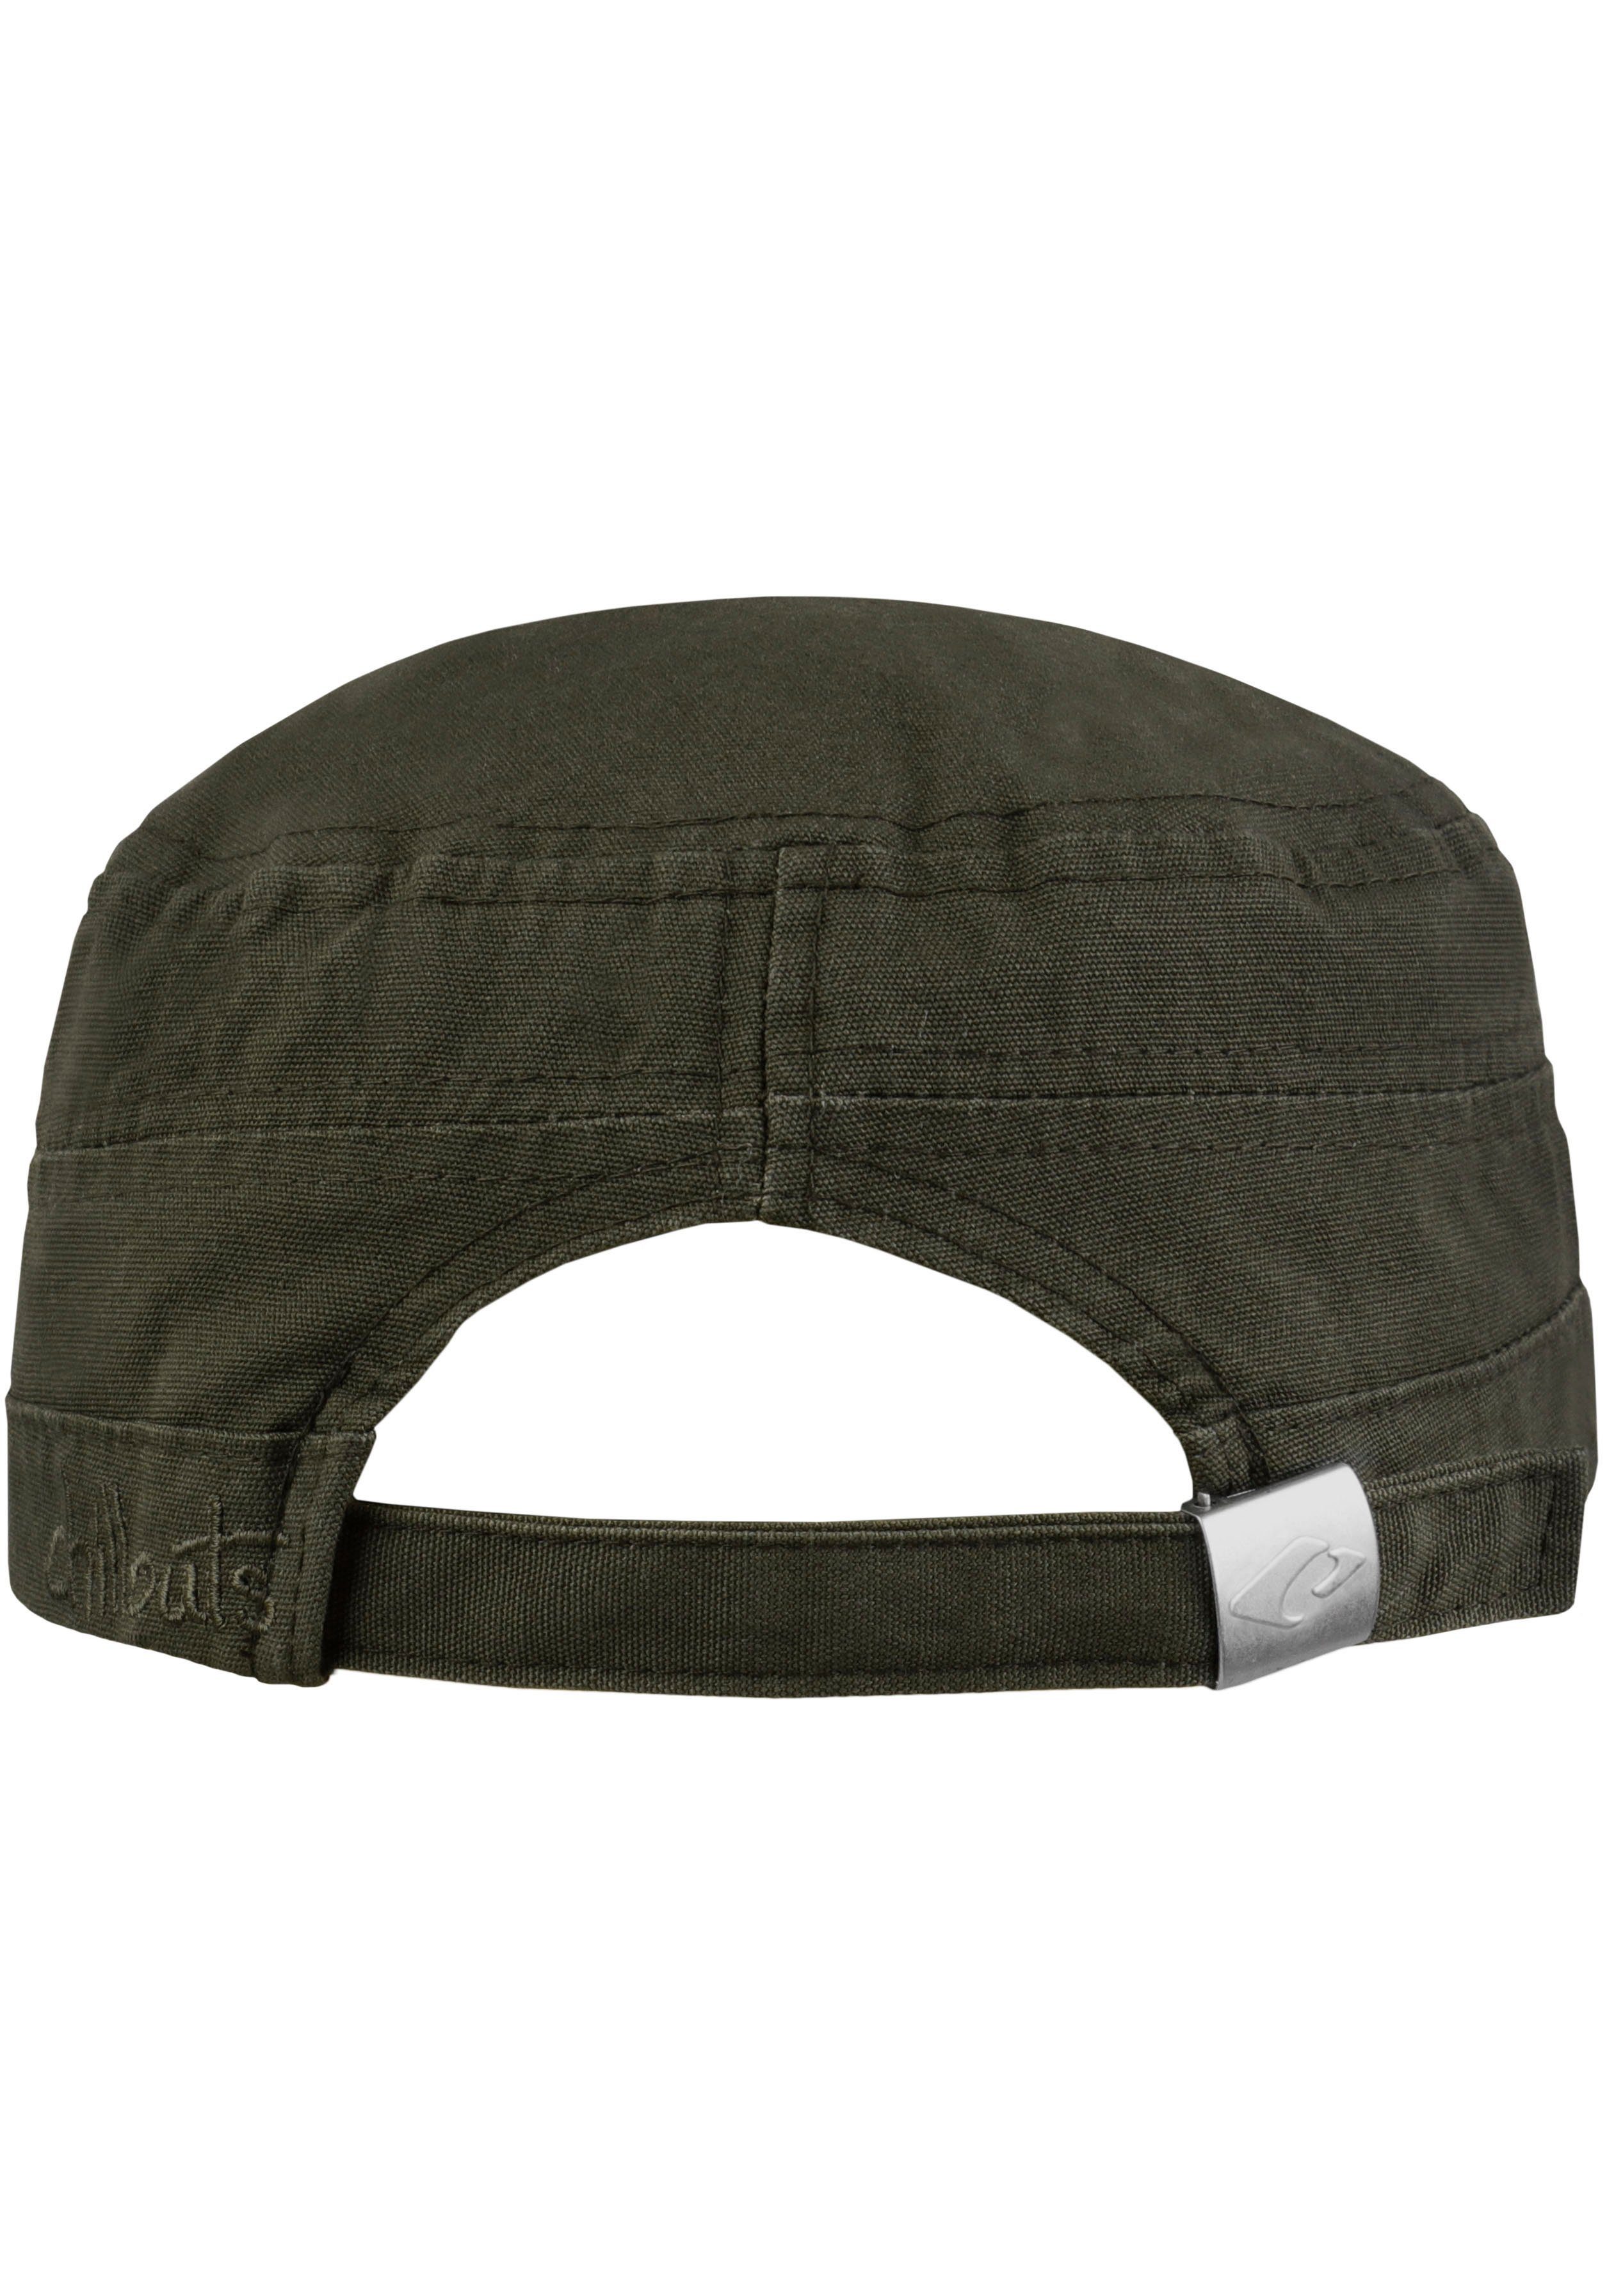 chillouts Army Cap El Paso Baumwolle, olivgrün Size One aus reiner atmungsaktiv, Hat